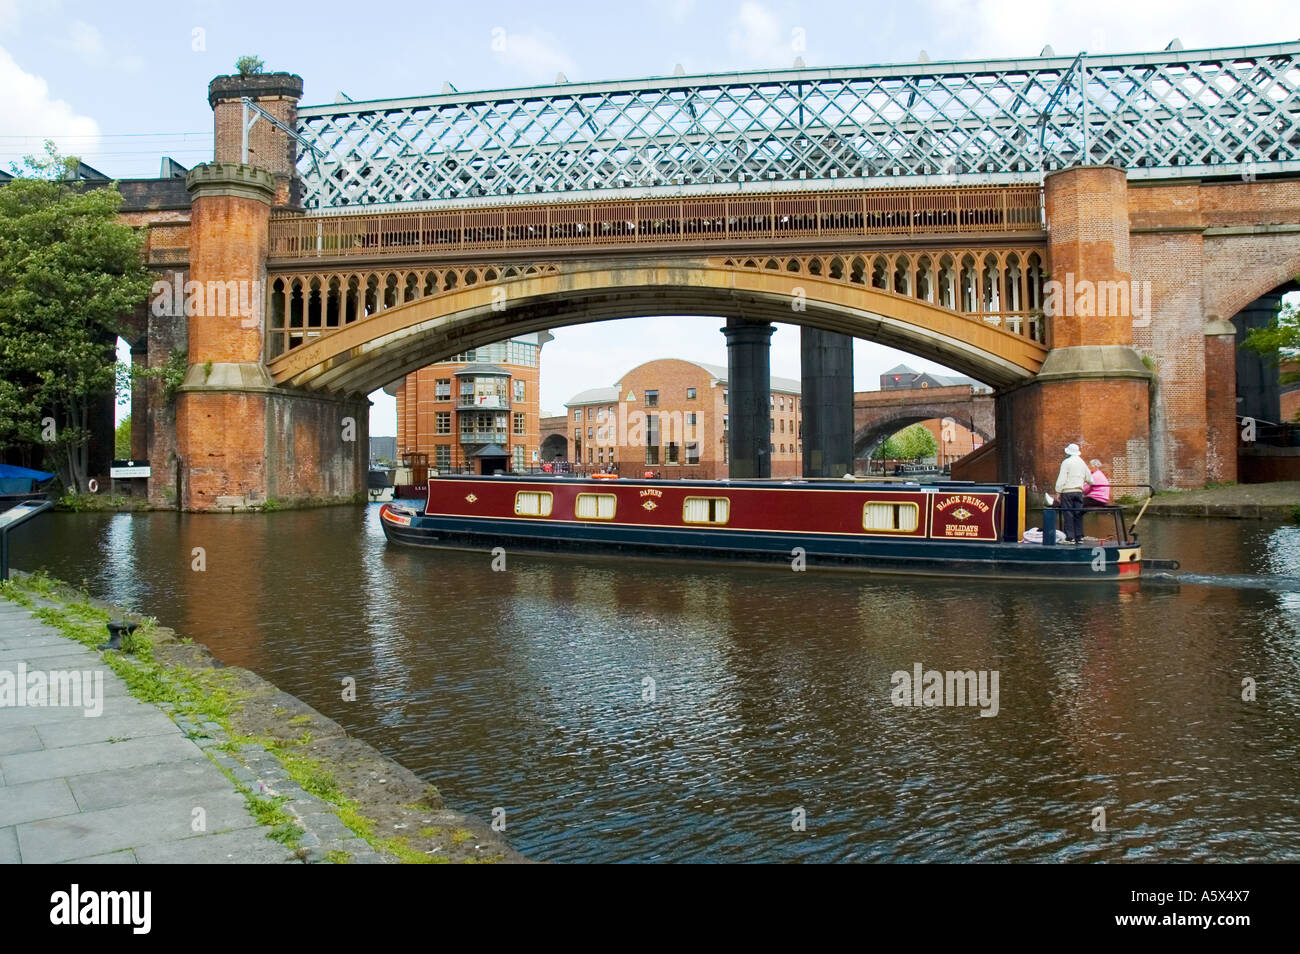 Canal narrowboat beneath a Victorian railway bridge at Castlefield Basin, Manchester, UK Stock Photo